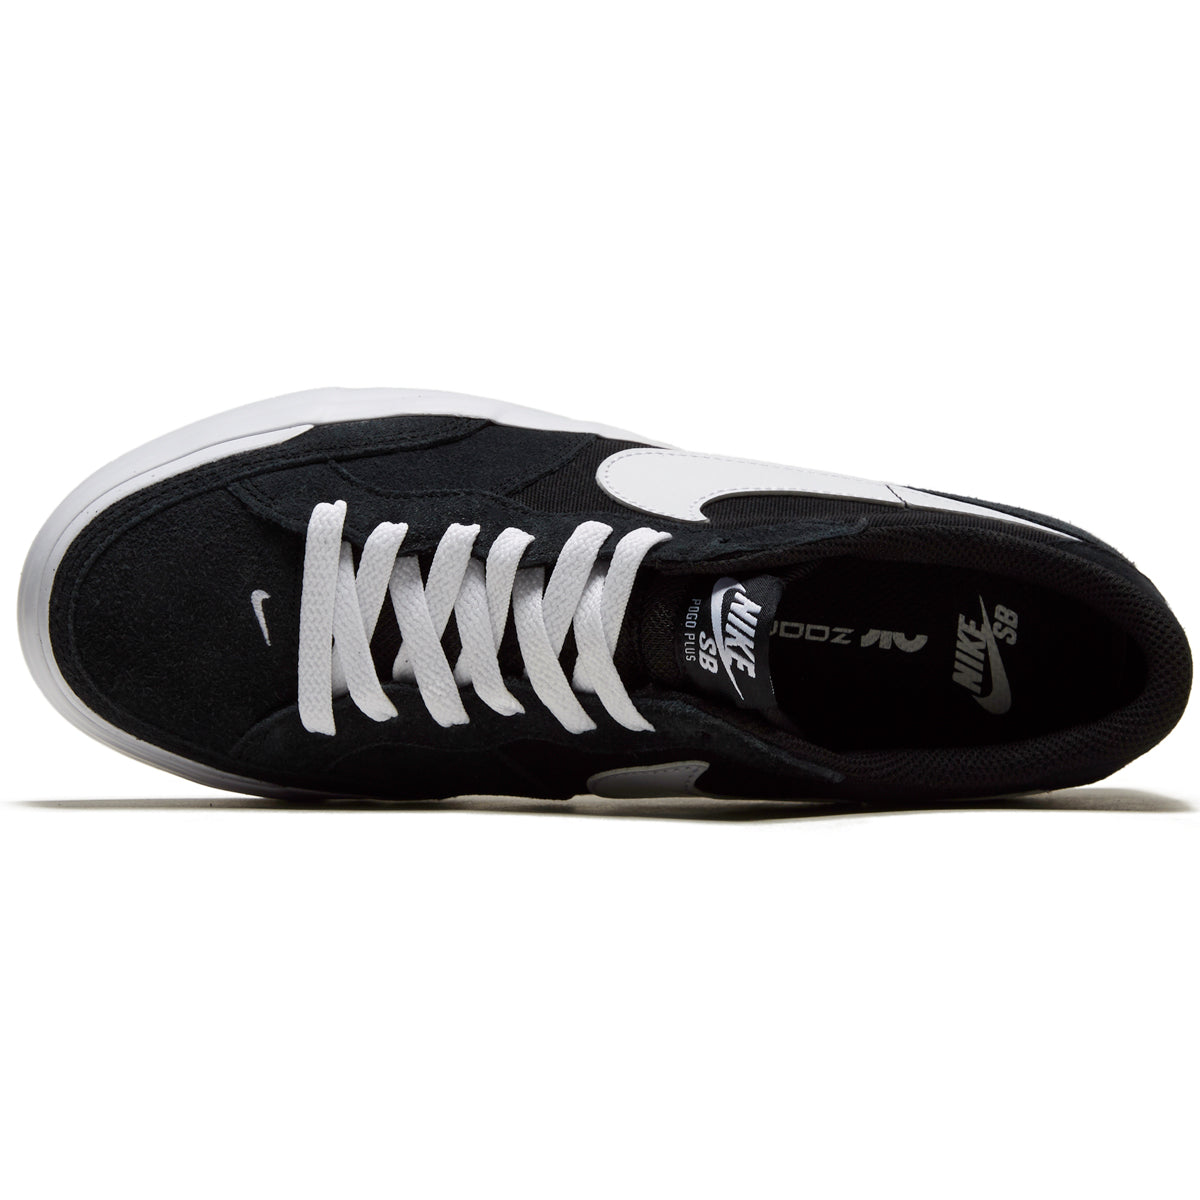 Nike SB Zoom Pogo Plus Shoes - Black/White/Black/White image 3